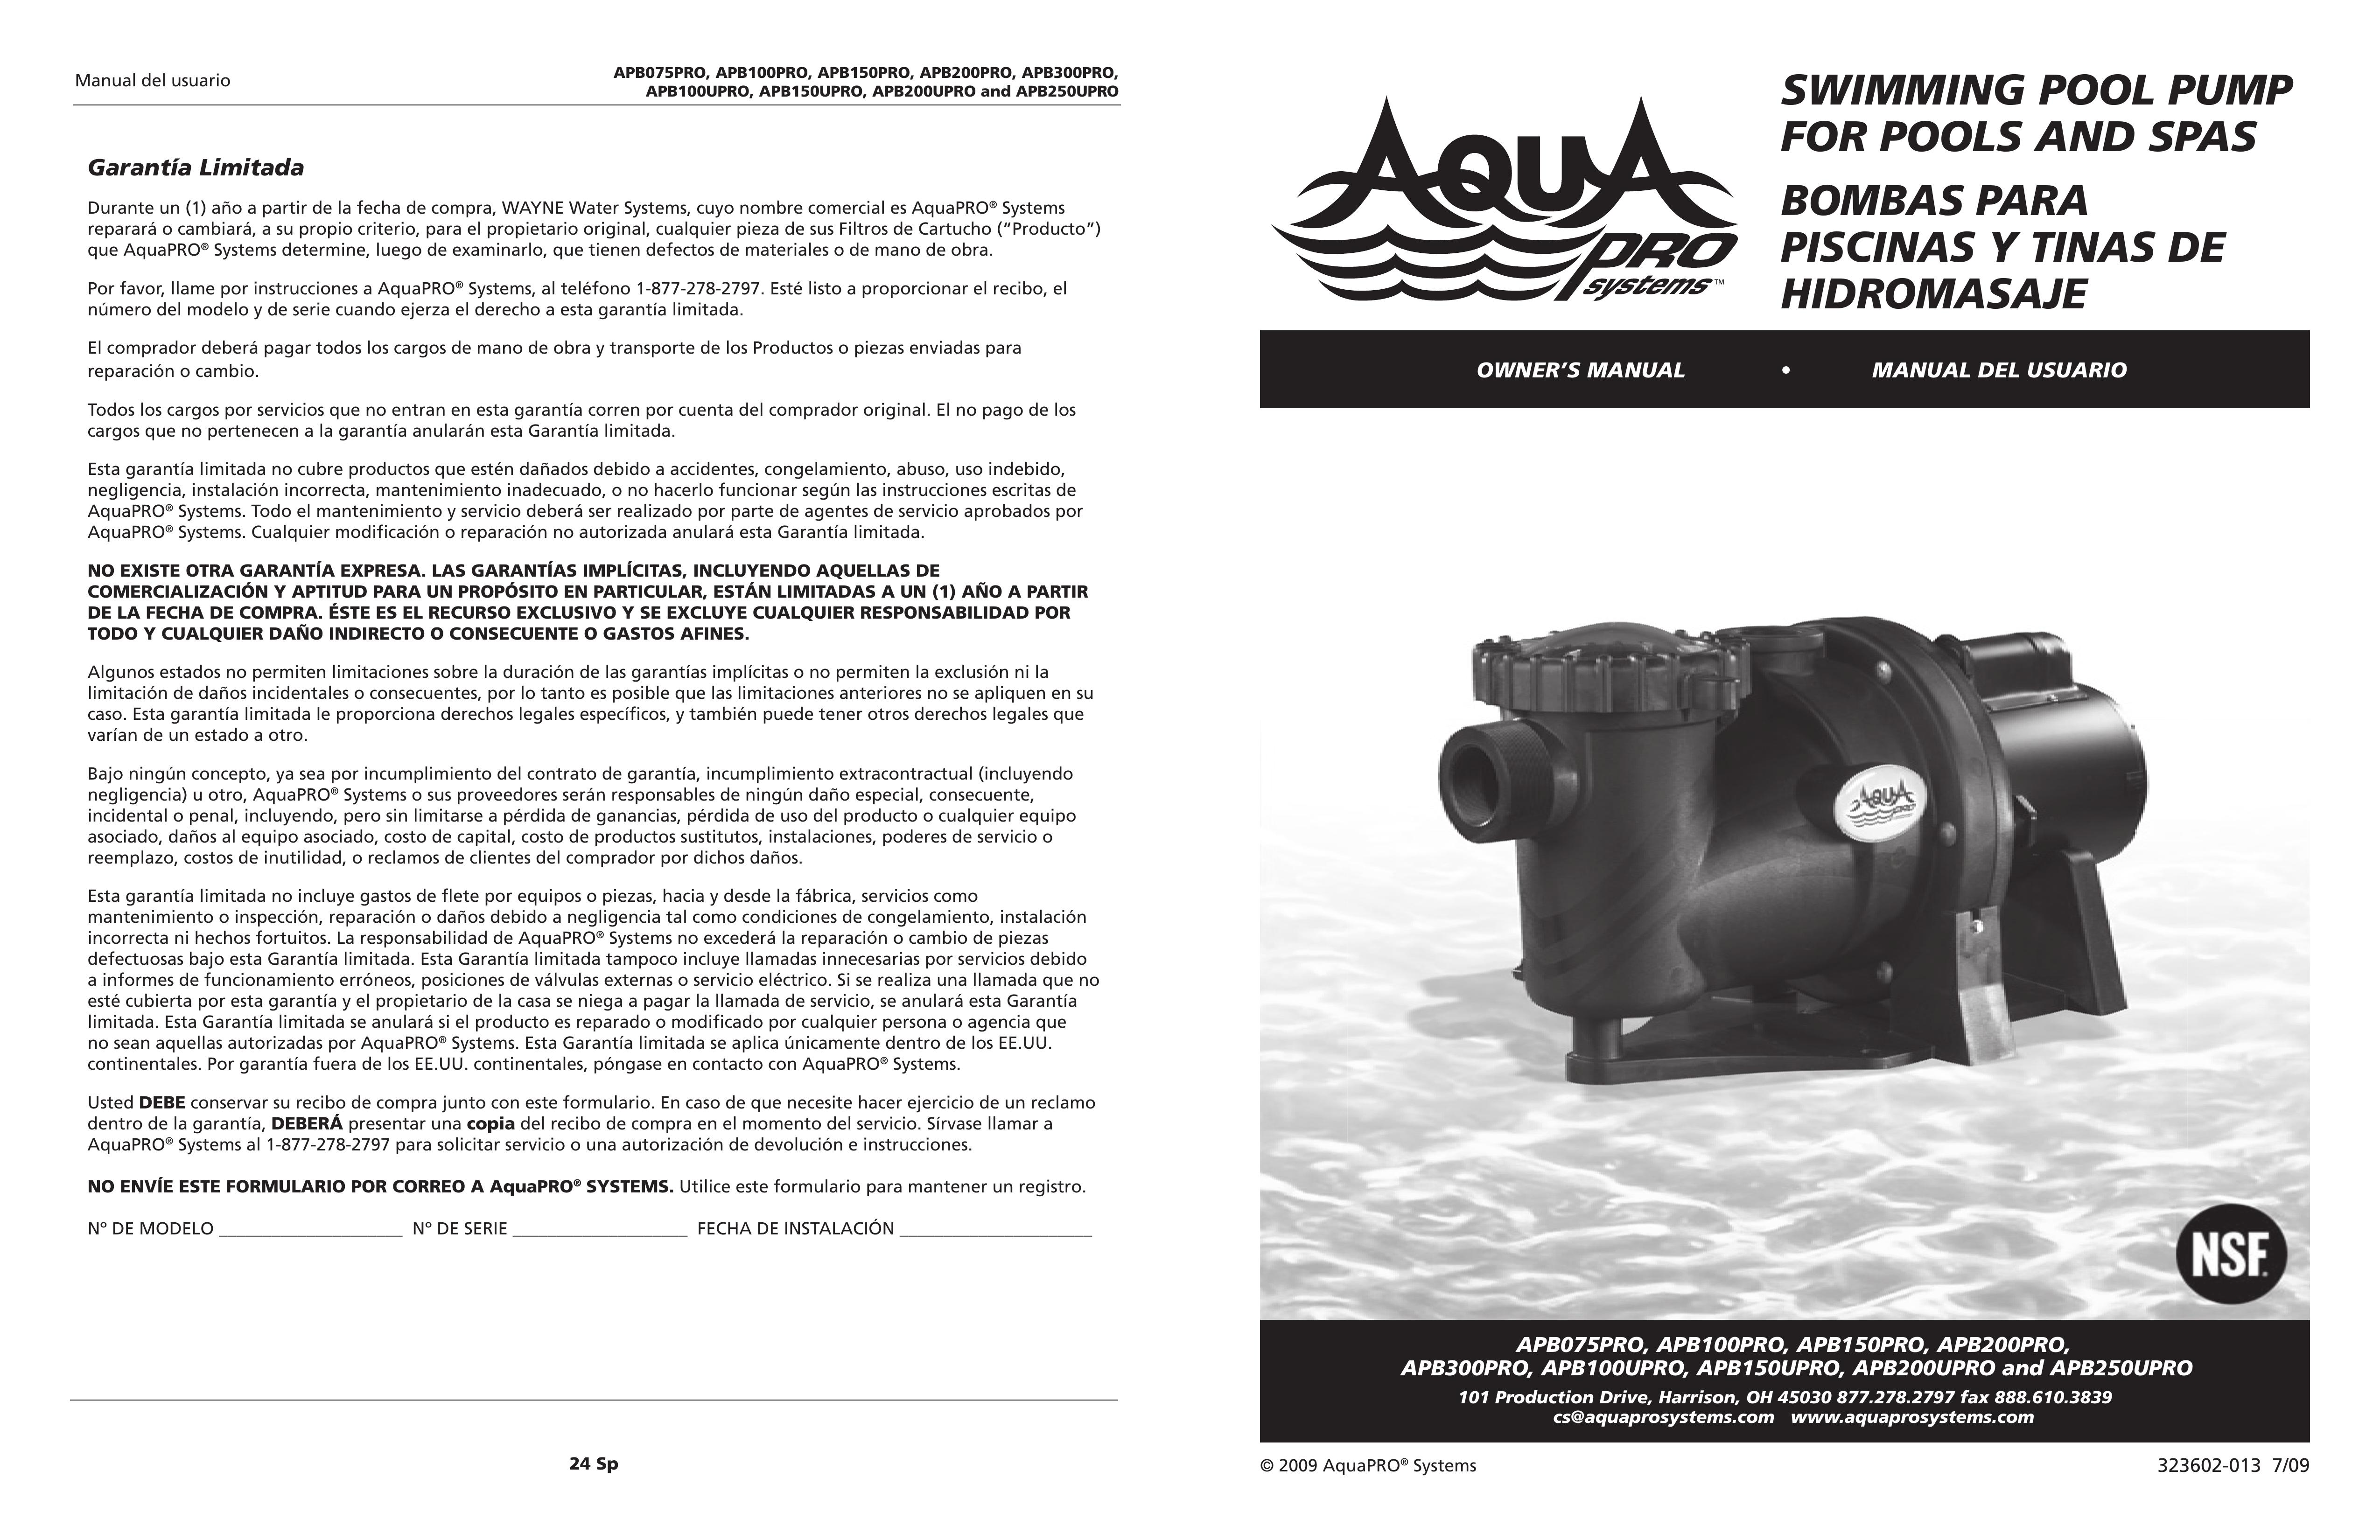 AquaPRO APB100UPRO Swimming Pool Pump User Manual